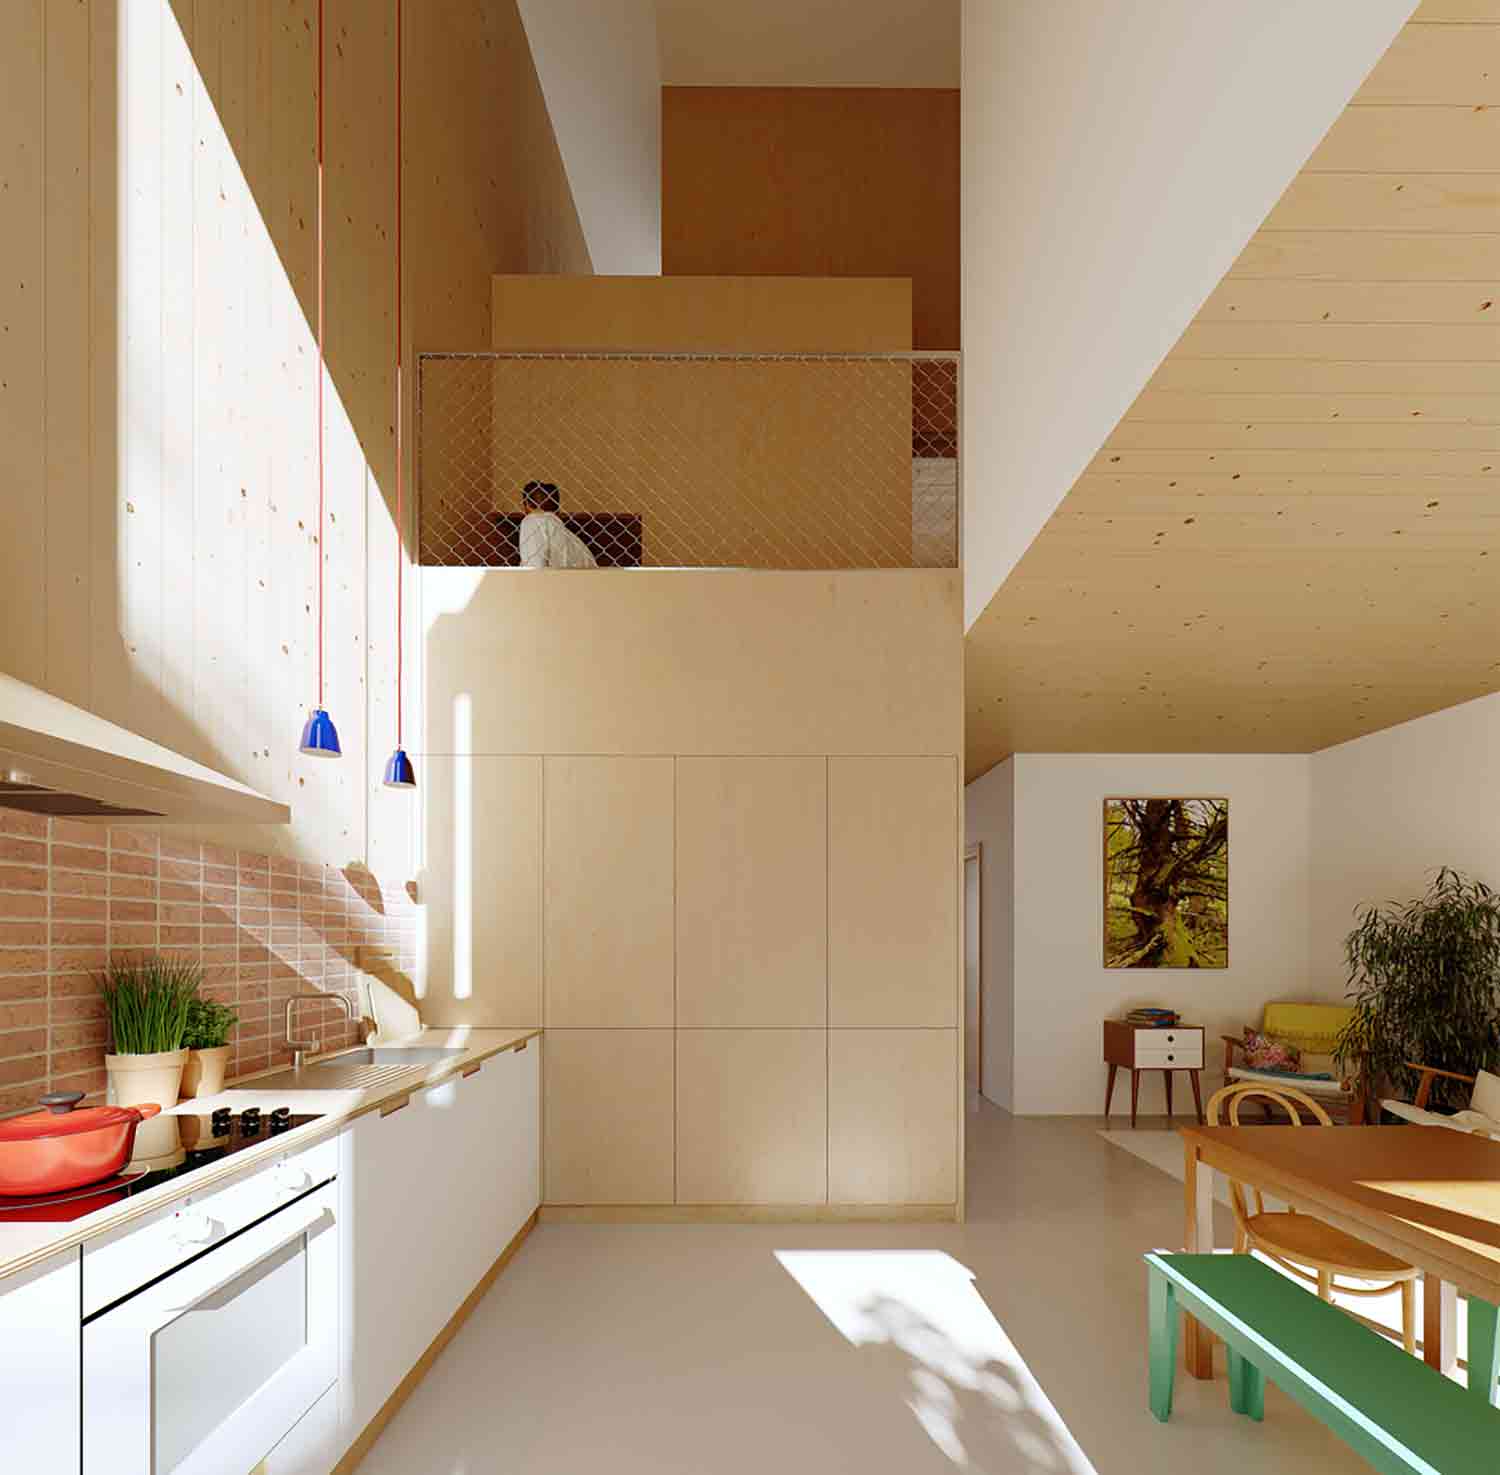 Piiri wooden housing block by Tommila Architects